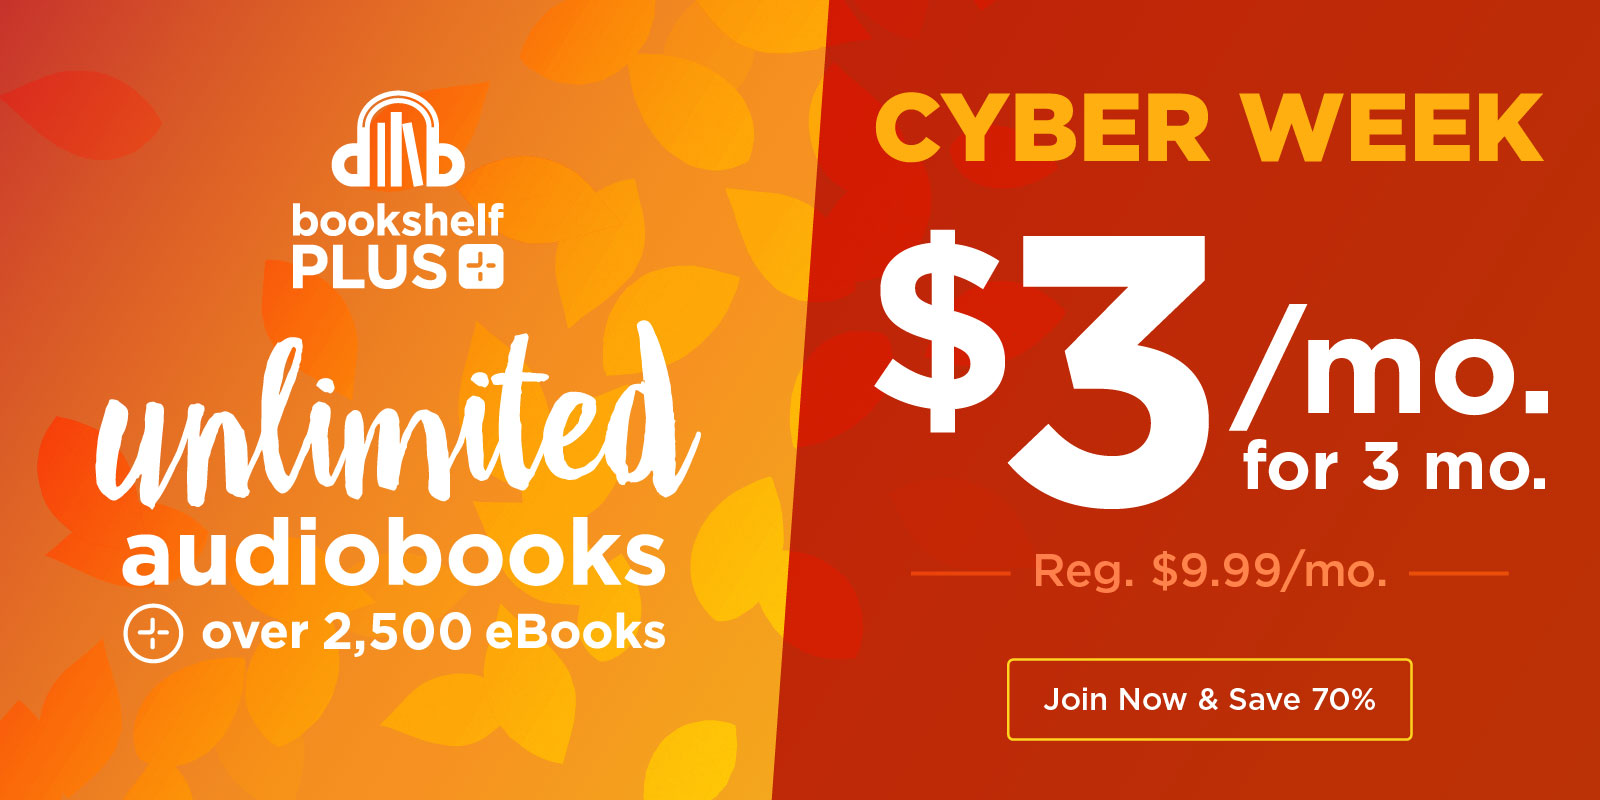 Cyber Week - $3/mo for 3 months Bookshelf PLUS+